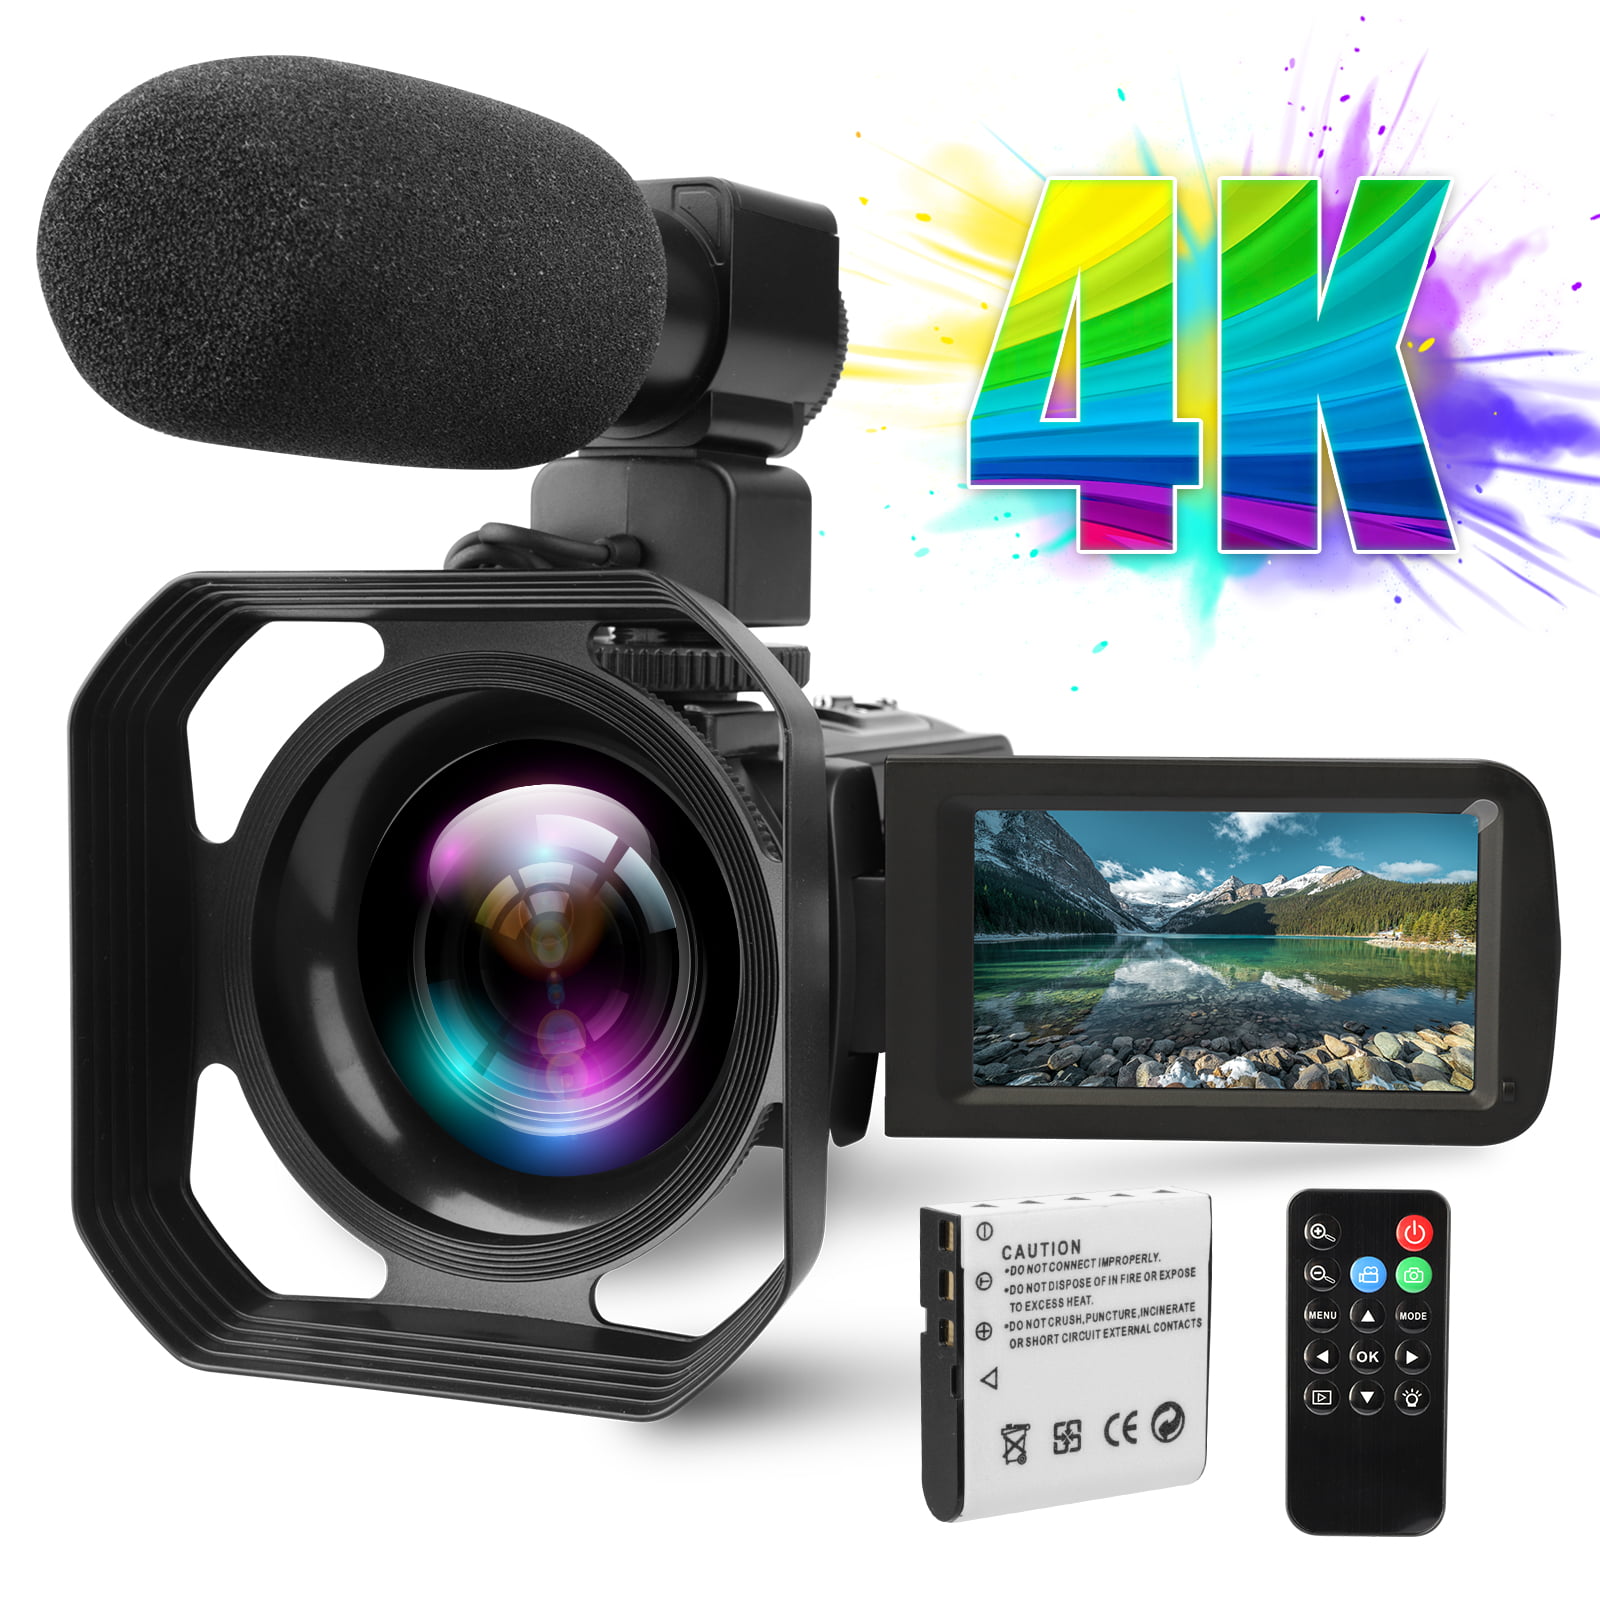 prins Bloeden opslag 4K Camcorder, Video Recorder Vlogging Digital Camera for YouTube Blogging  with Microphone, Wifi Cam Recording, Flip Screen - Walmart.com